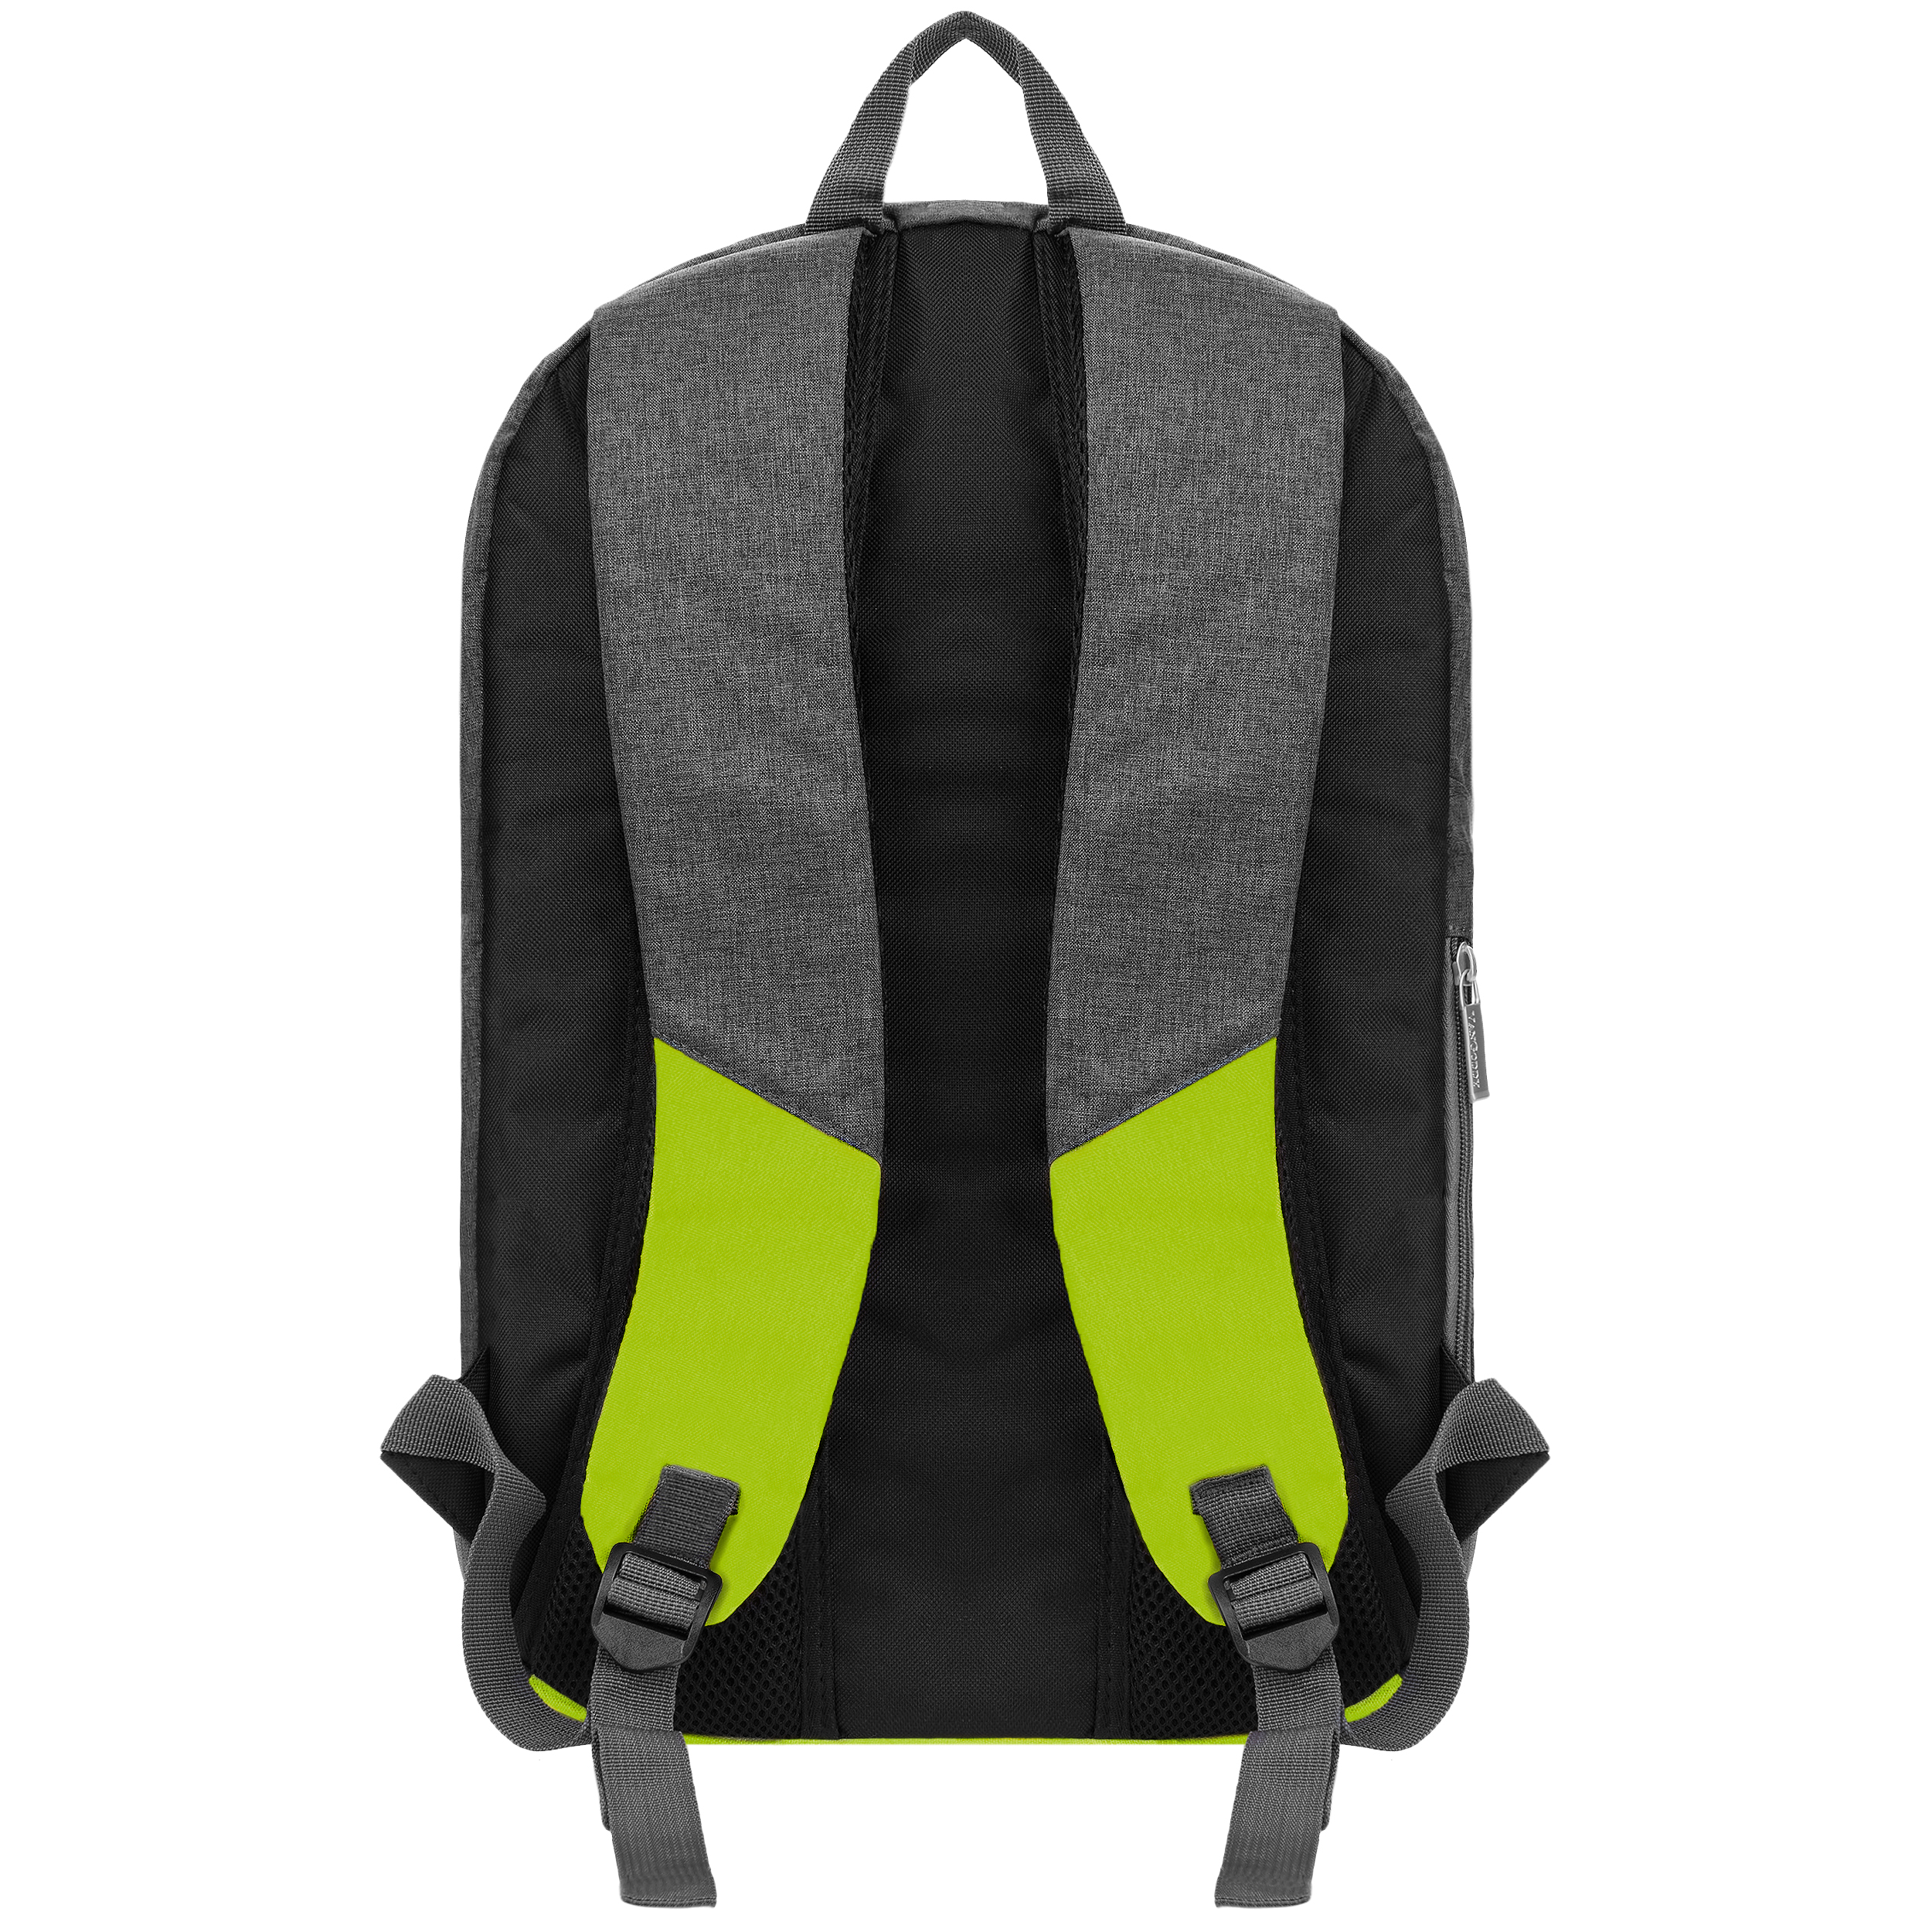 VANGODDY Grove Padded Nylon School Hiking Office Notebook Backpack fits 15, 15.6 Acer Aspire V Laptop models